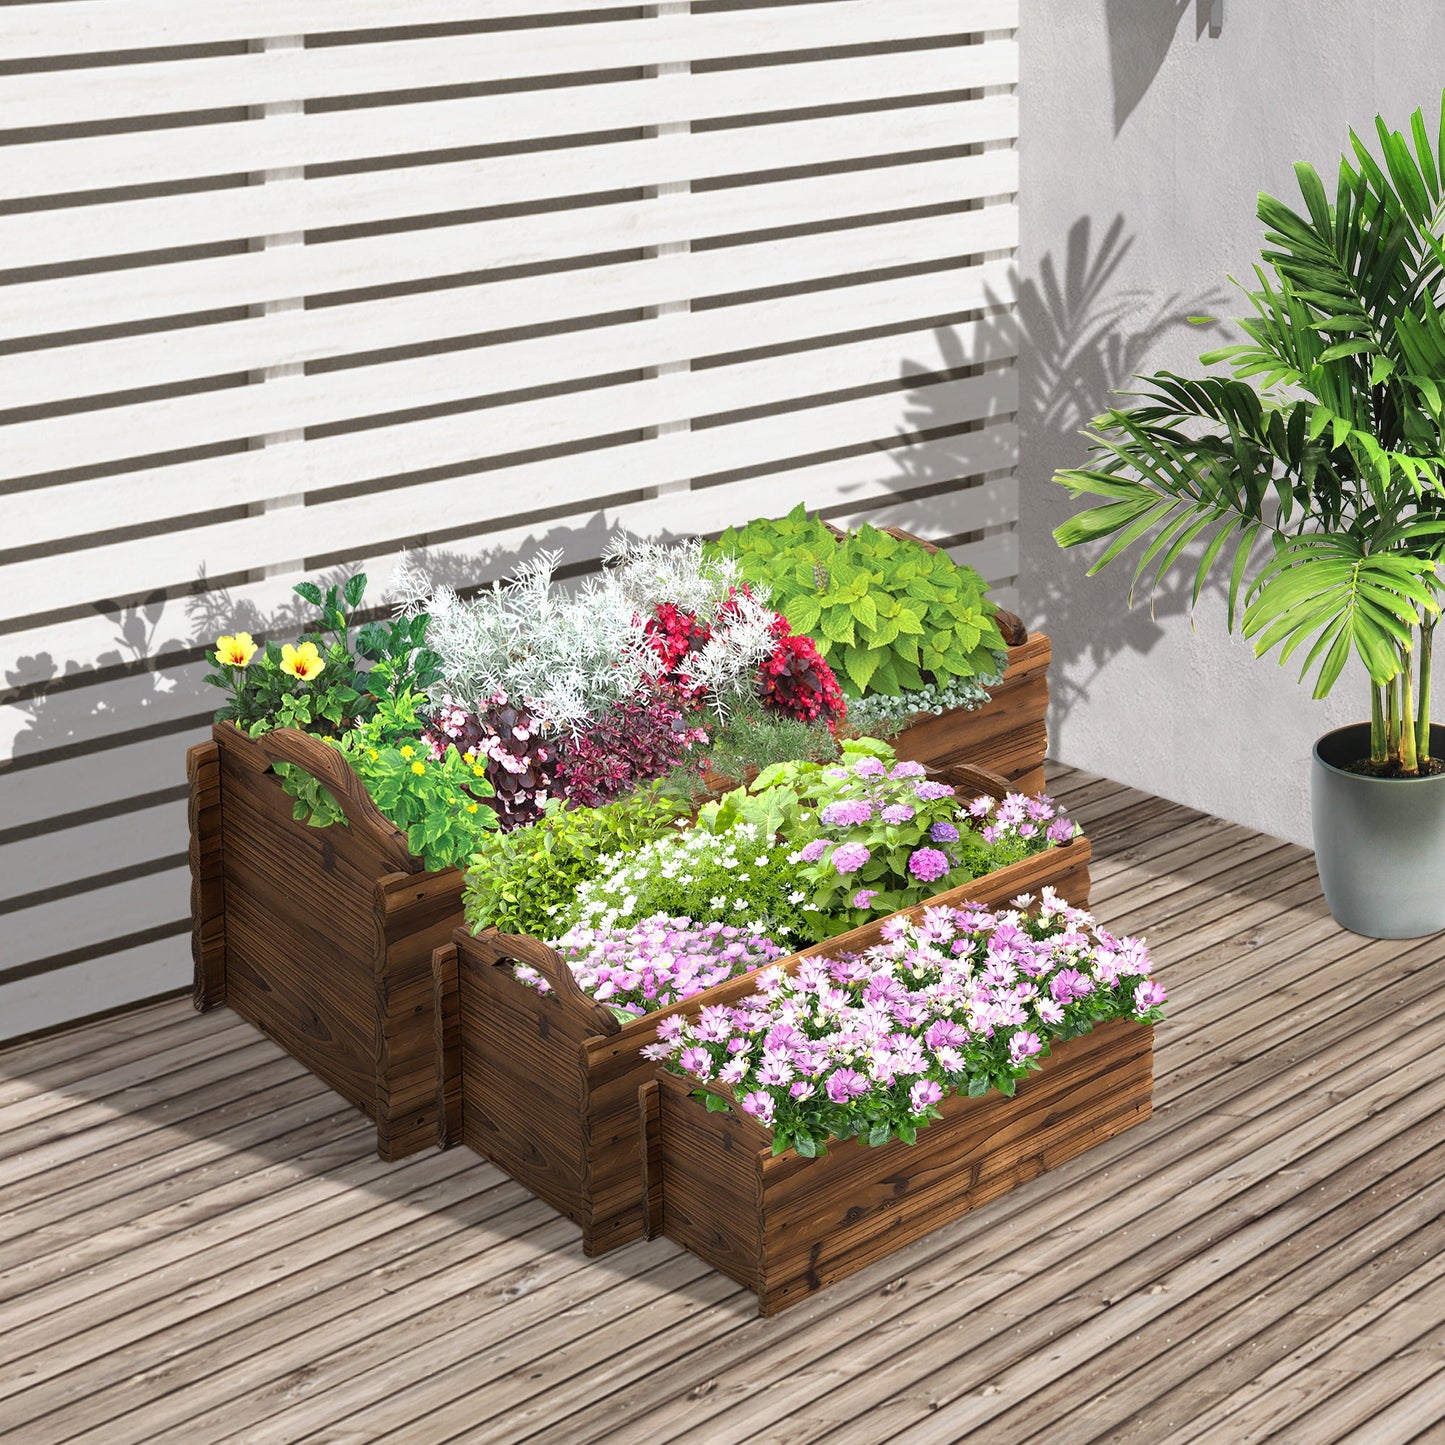 3 Pieces Raised Garden Bed, Wooden Planter Box, Rectangular Garden Flower Bed with Handles at Gallery Canada